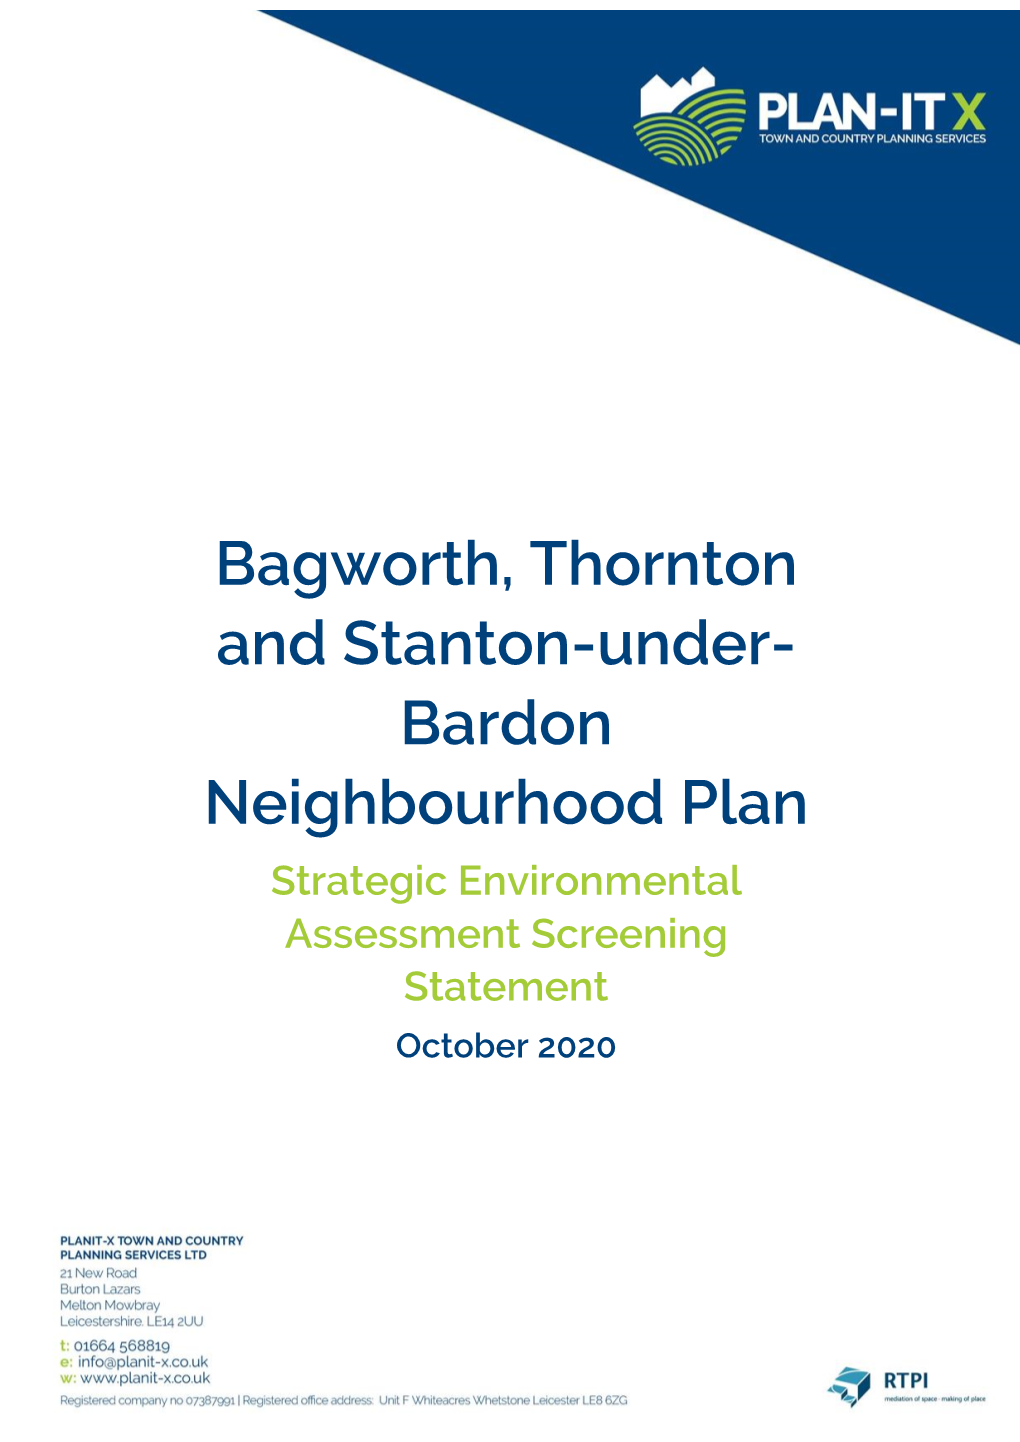 Bagworth, Thornton and Stanton Under Bardon Screening Statement